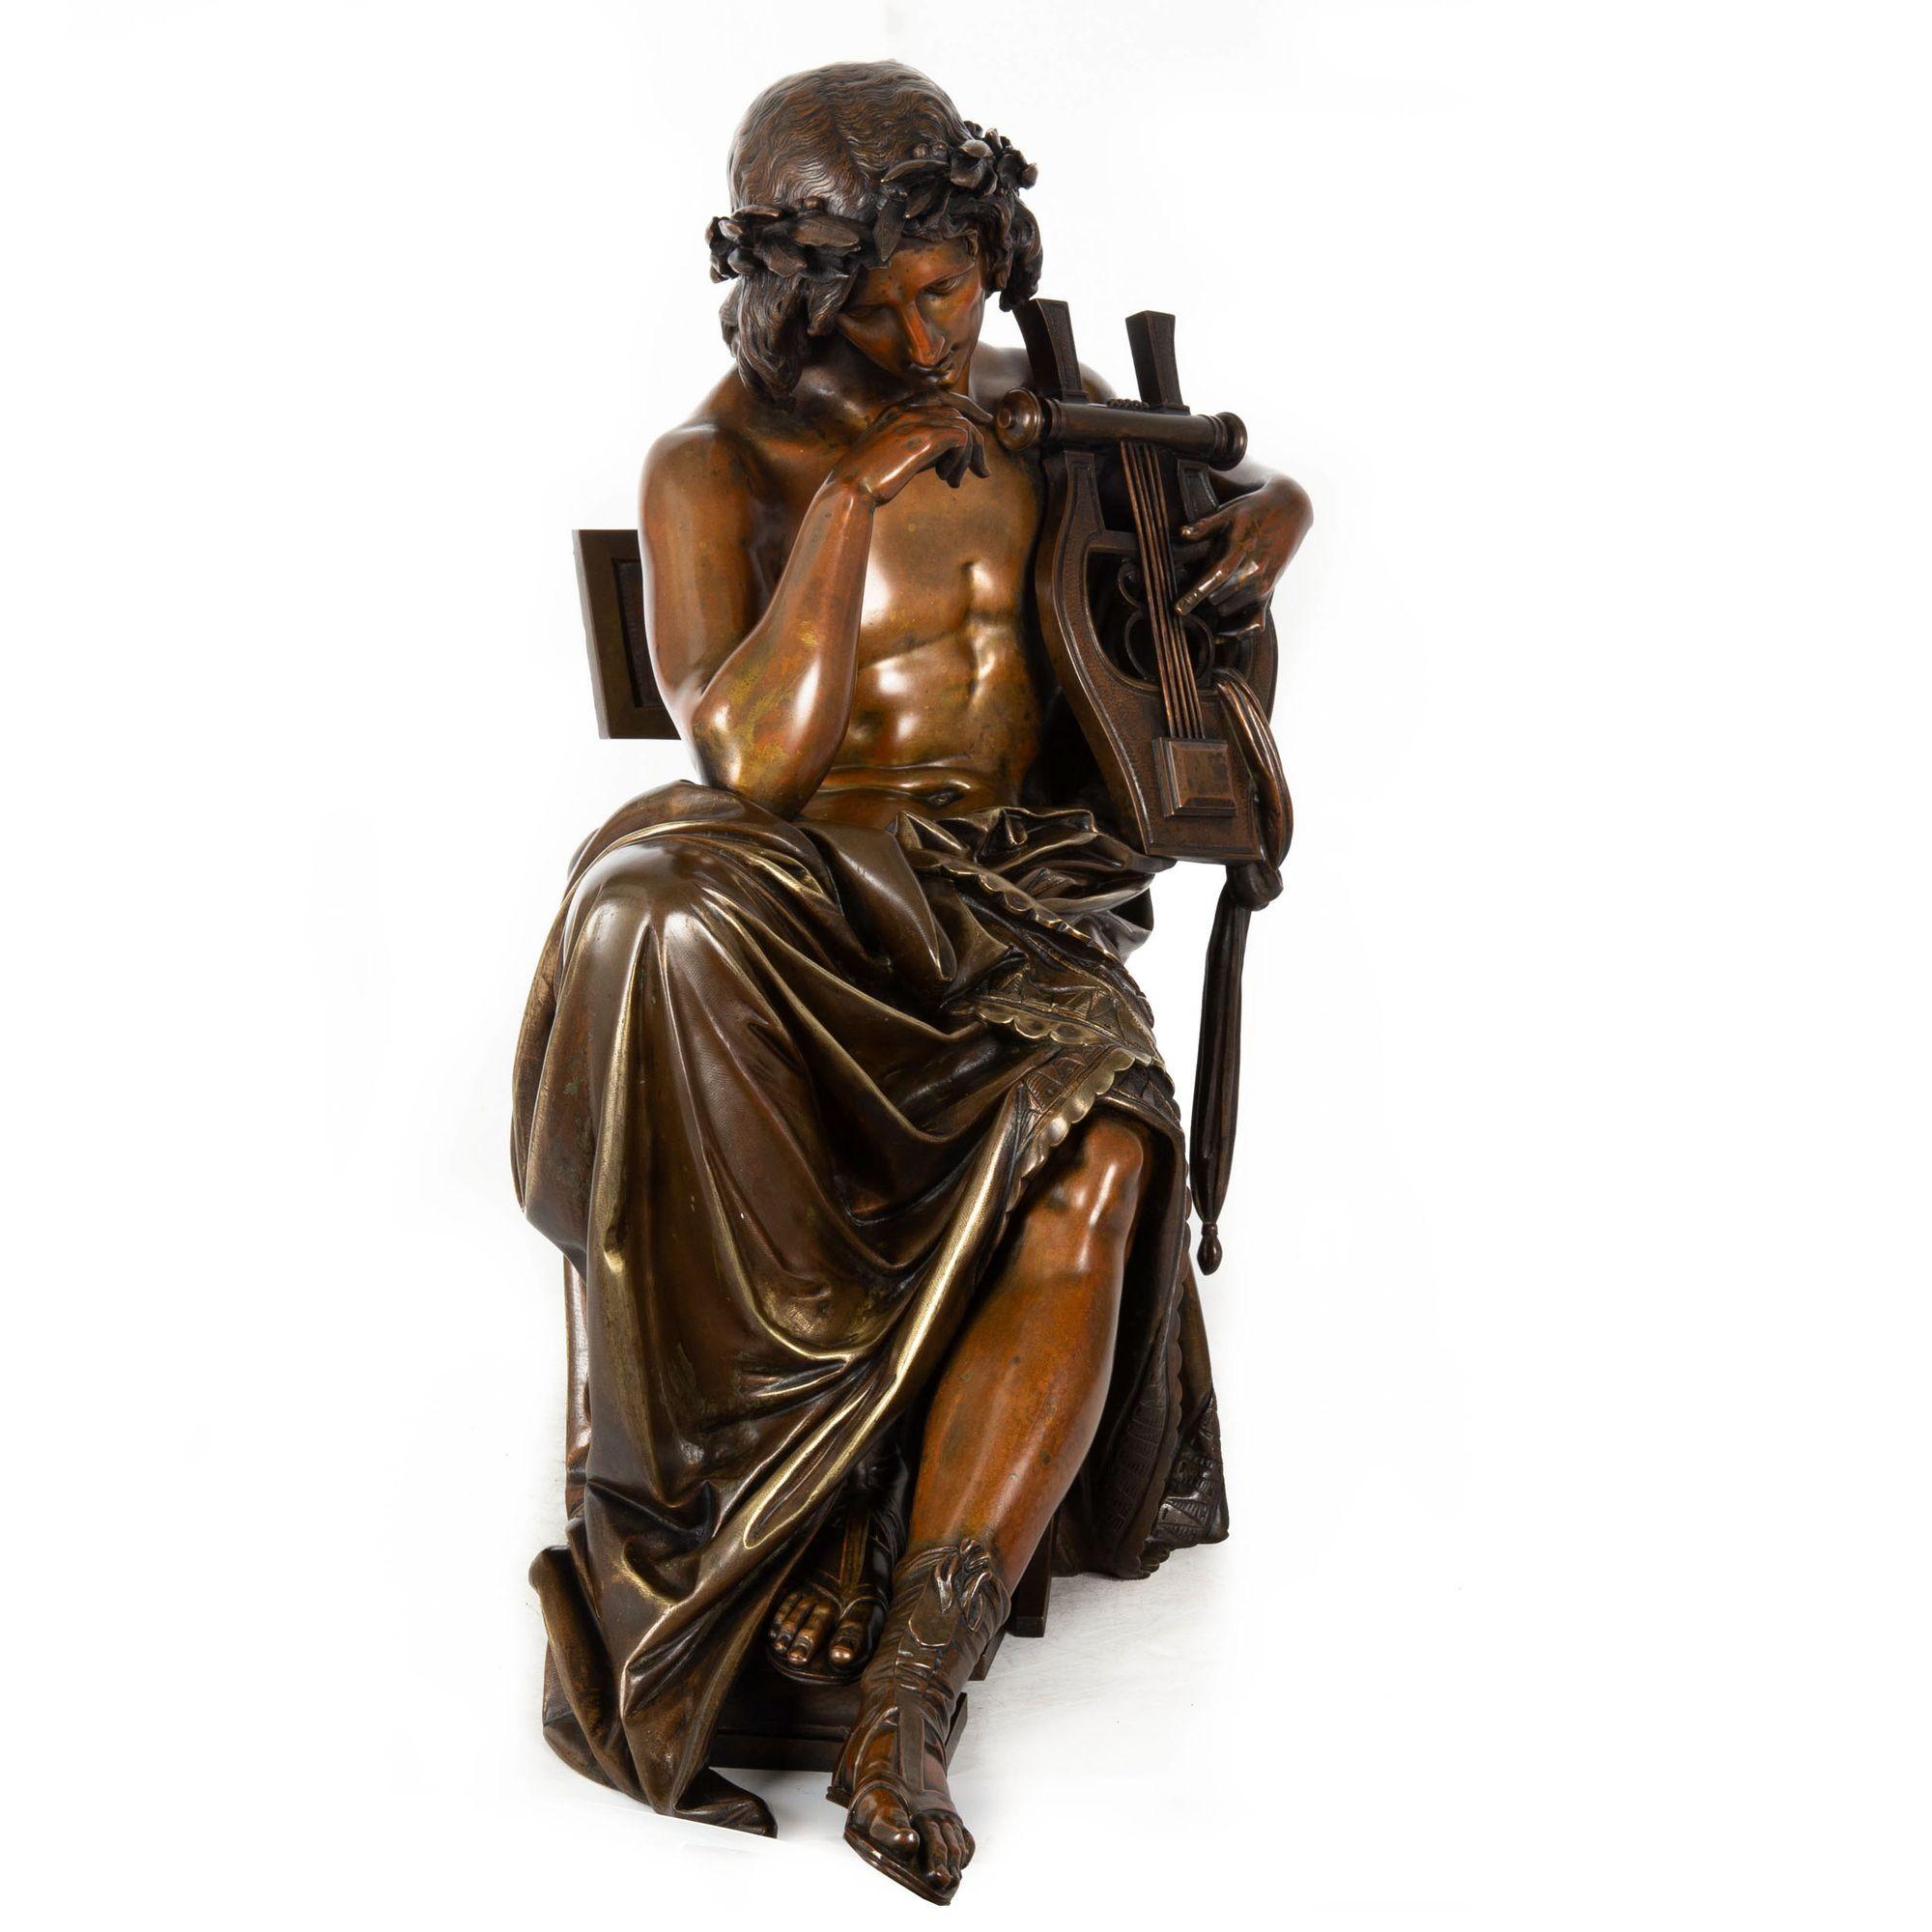 Romantic French Antique Bronze Sculpture of “Orpheus” by Albert Carrier-Belleuse